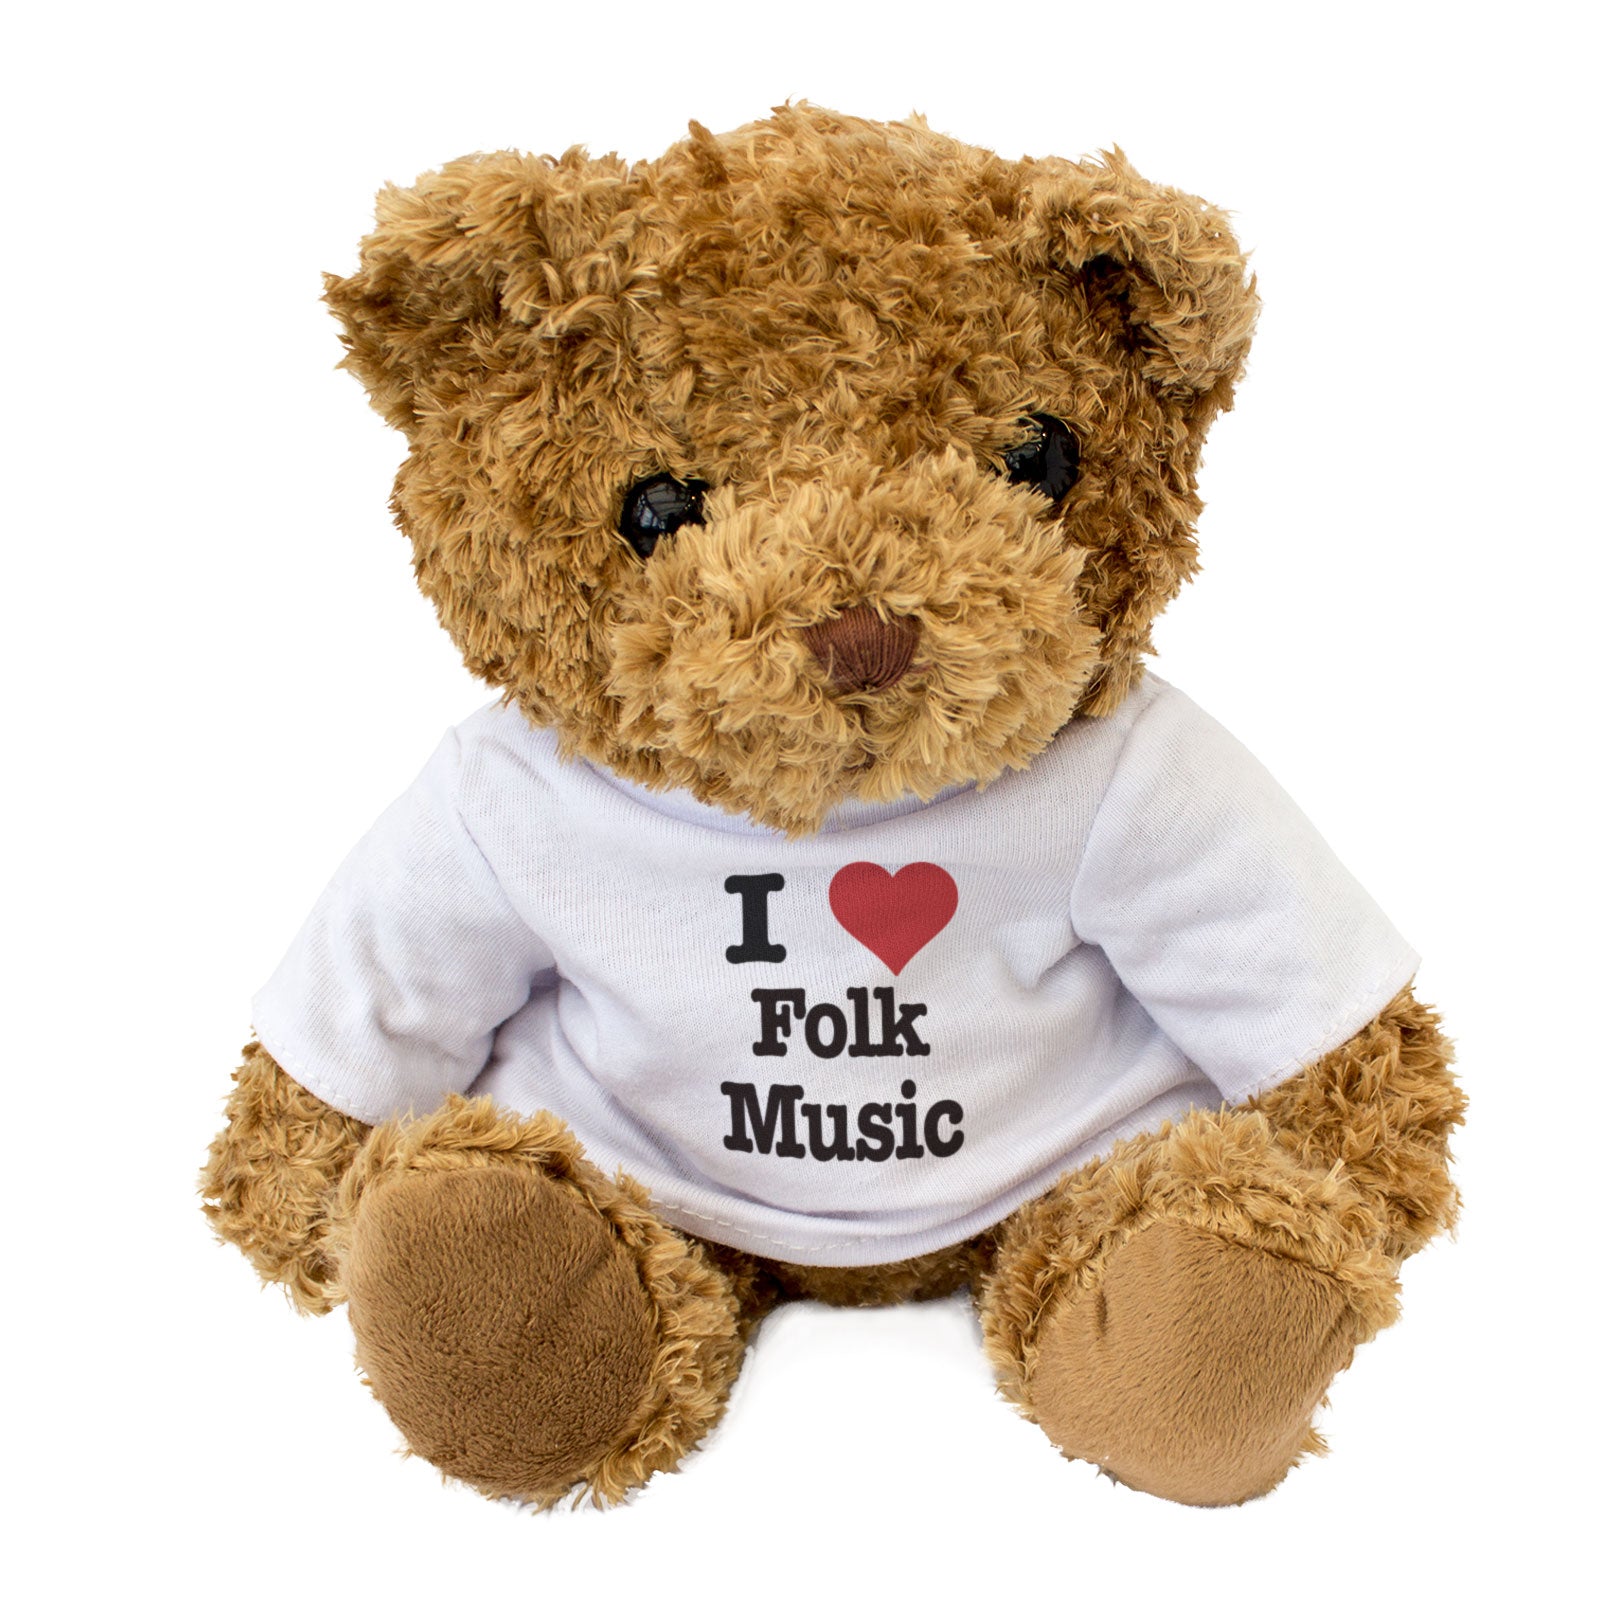 I Love Folk Music - Teddy Bear